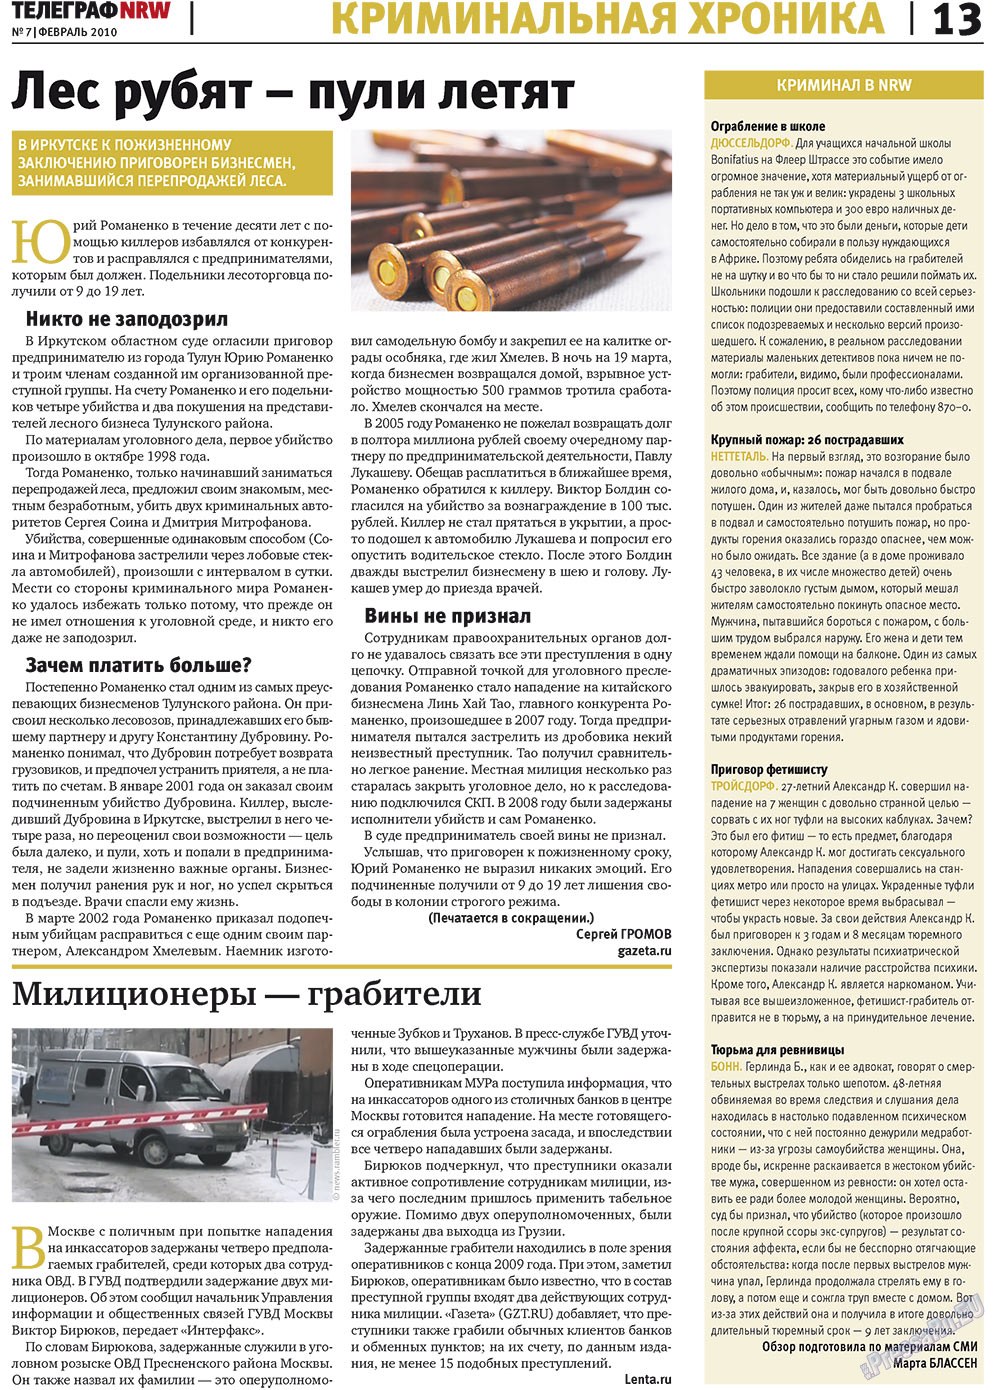 Телеграф NRW, газета. 2010 №2 стр.13